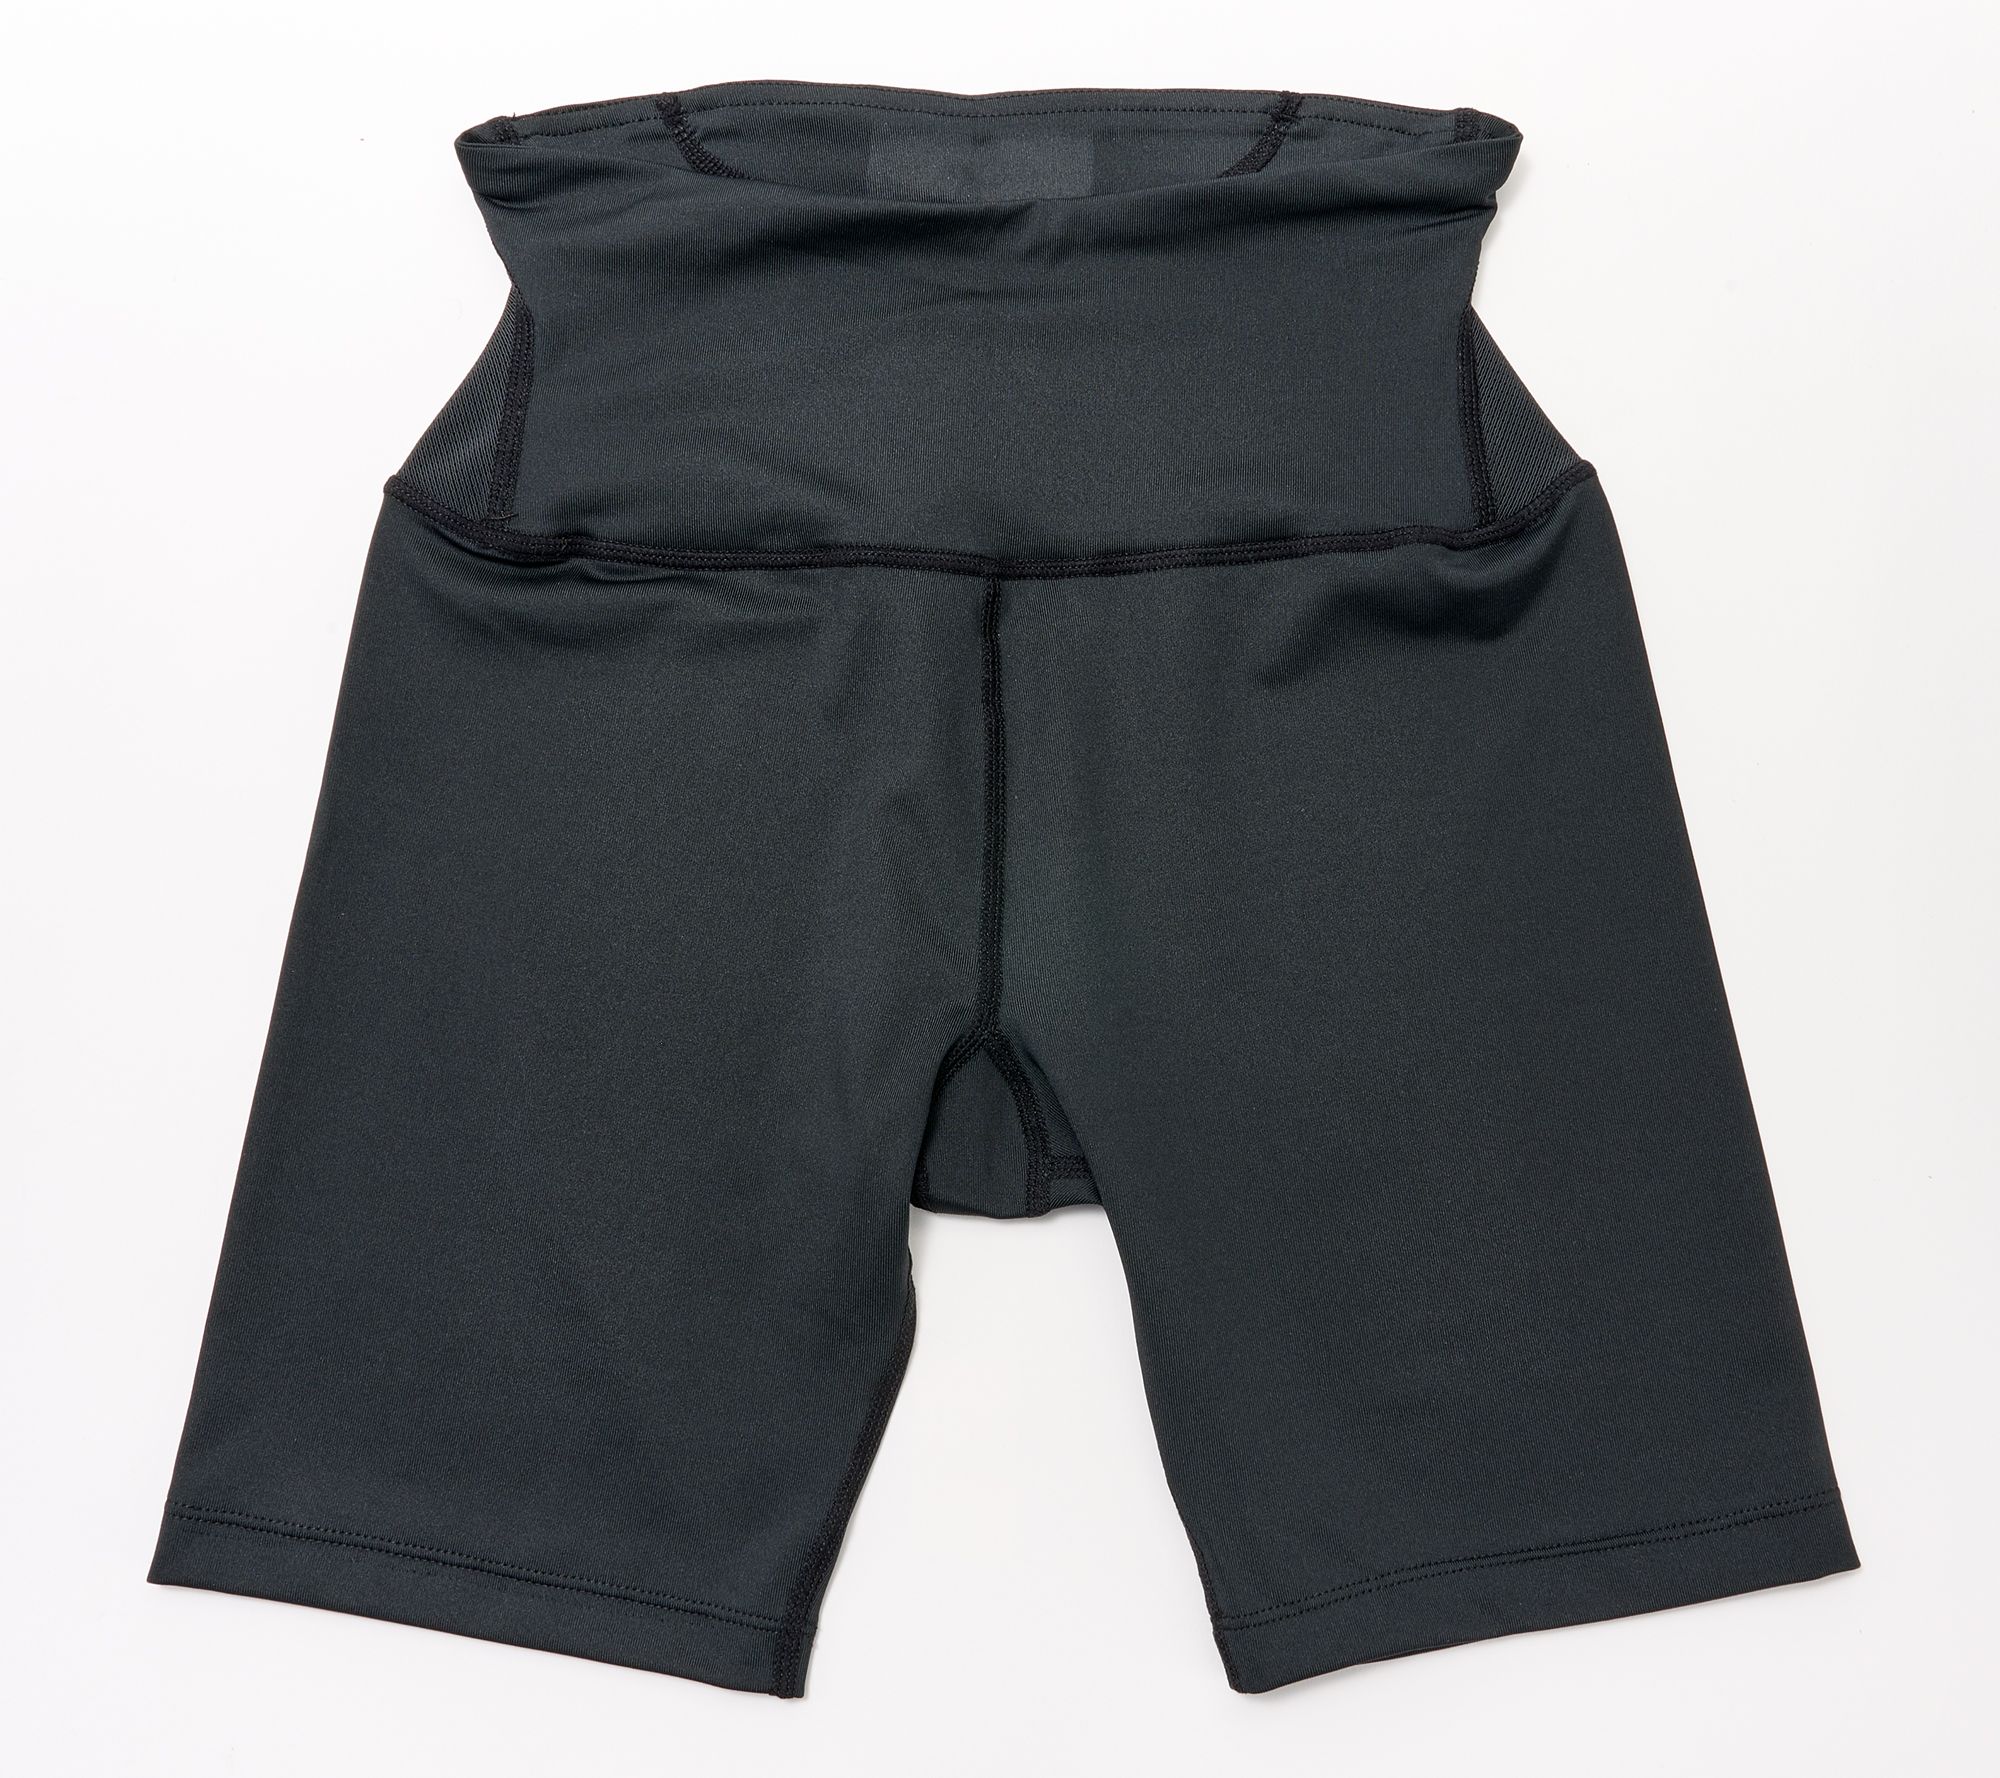 Shapellx AirSlim Semi-Sheer Mesh Smoothing Shorts 